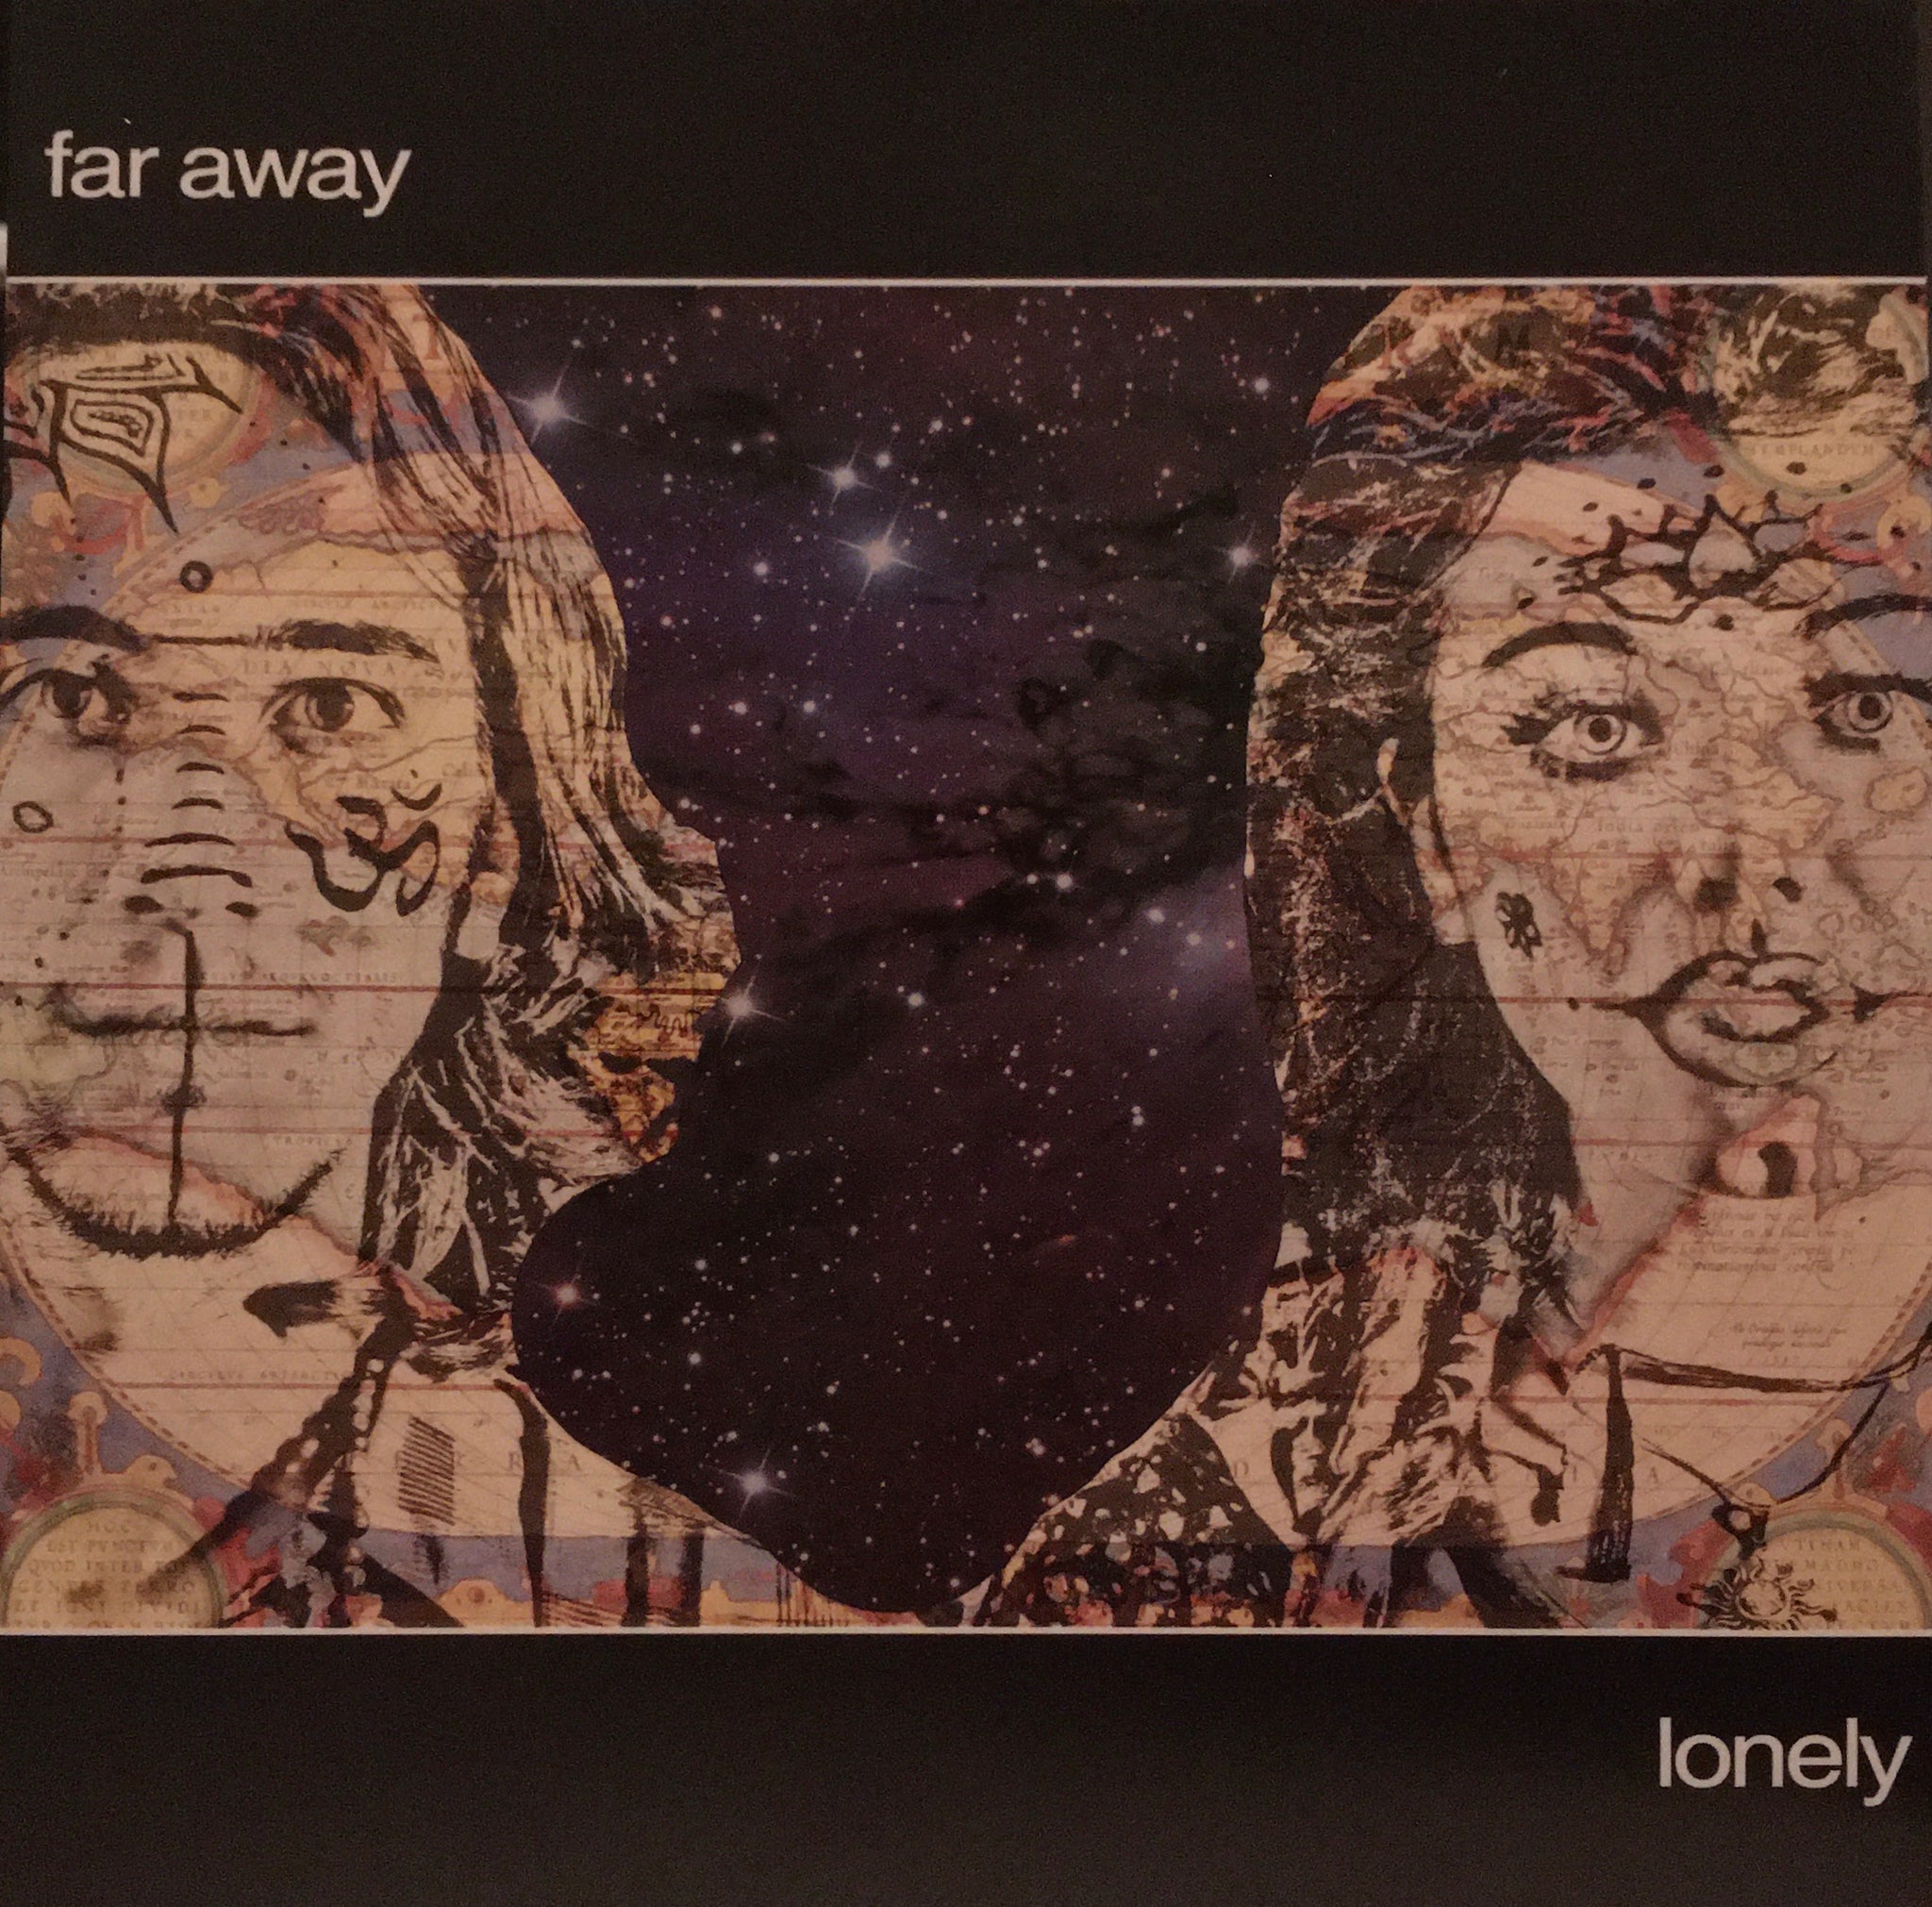 Mean Lady “Far Away” Single (2011)